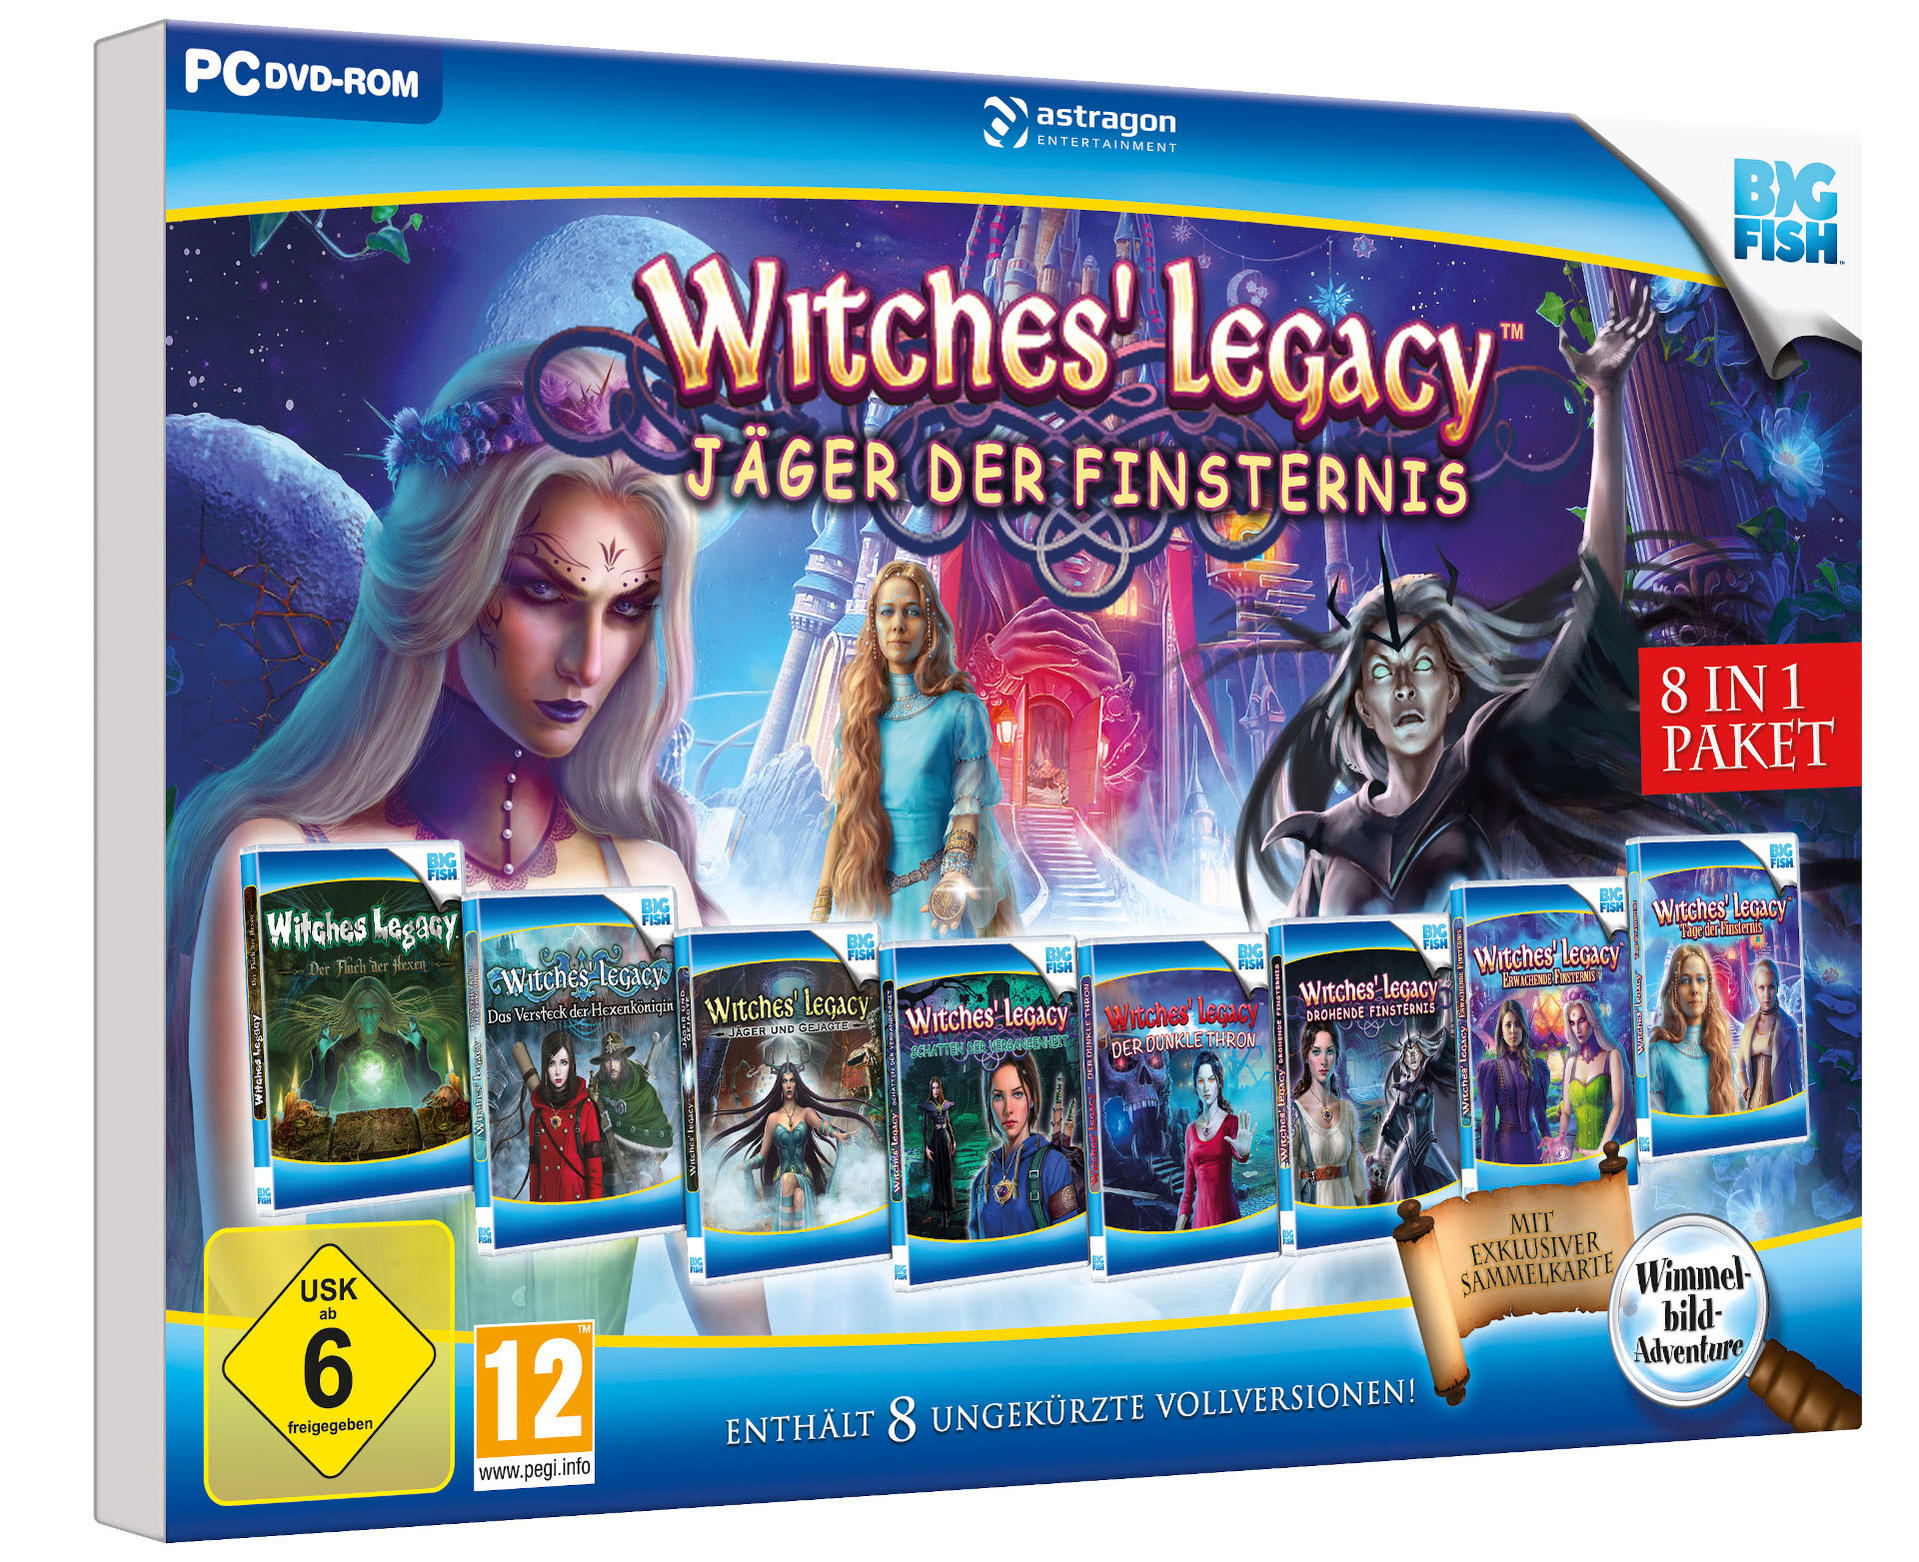 Jäger Witches Bundle - [PC] Finsternis Legacy: 8in1 der -